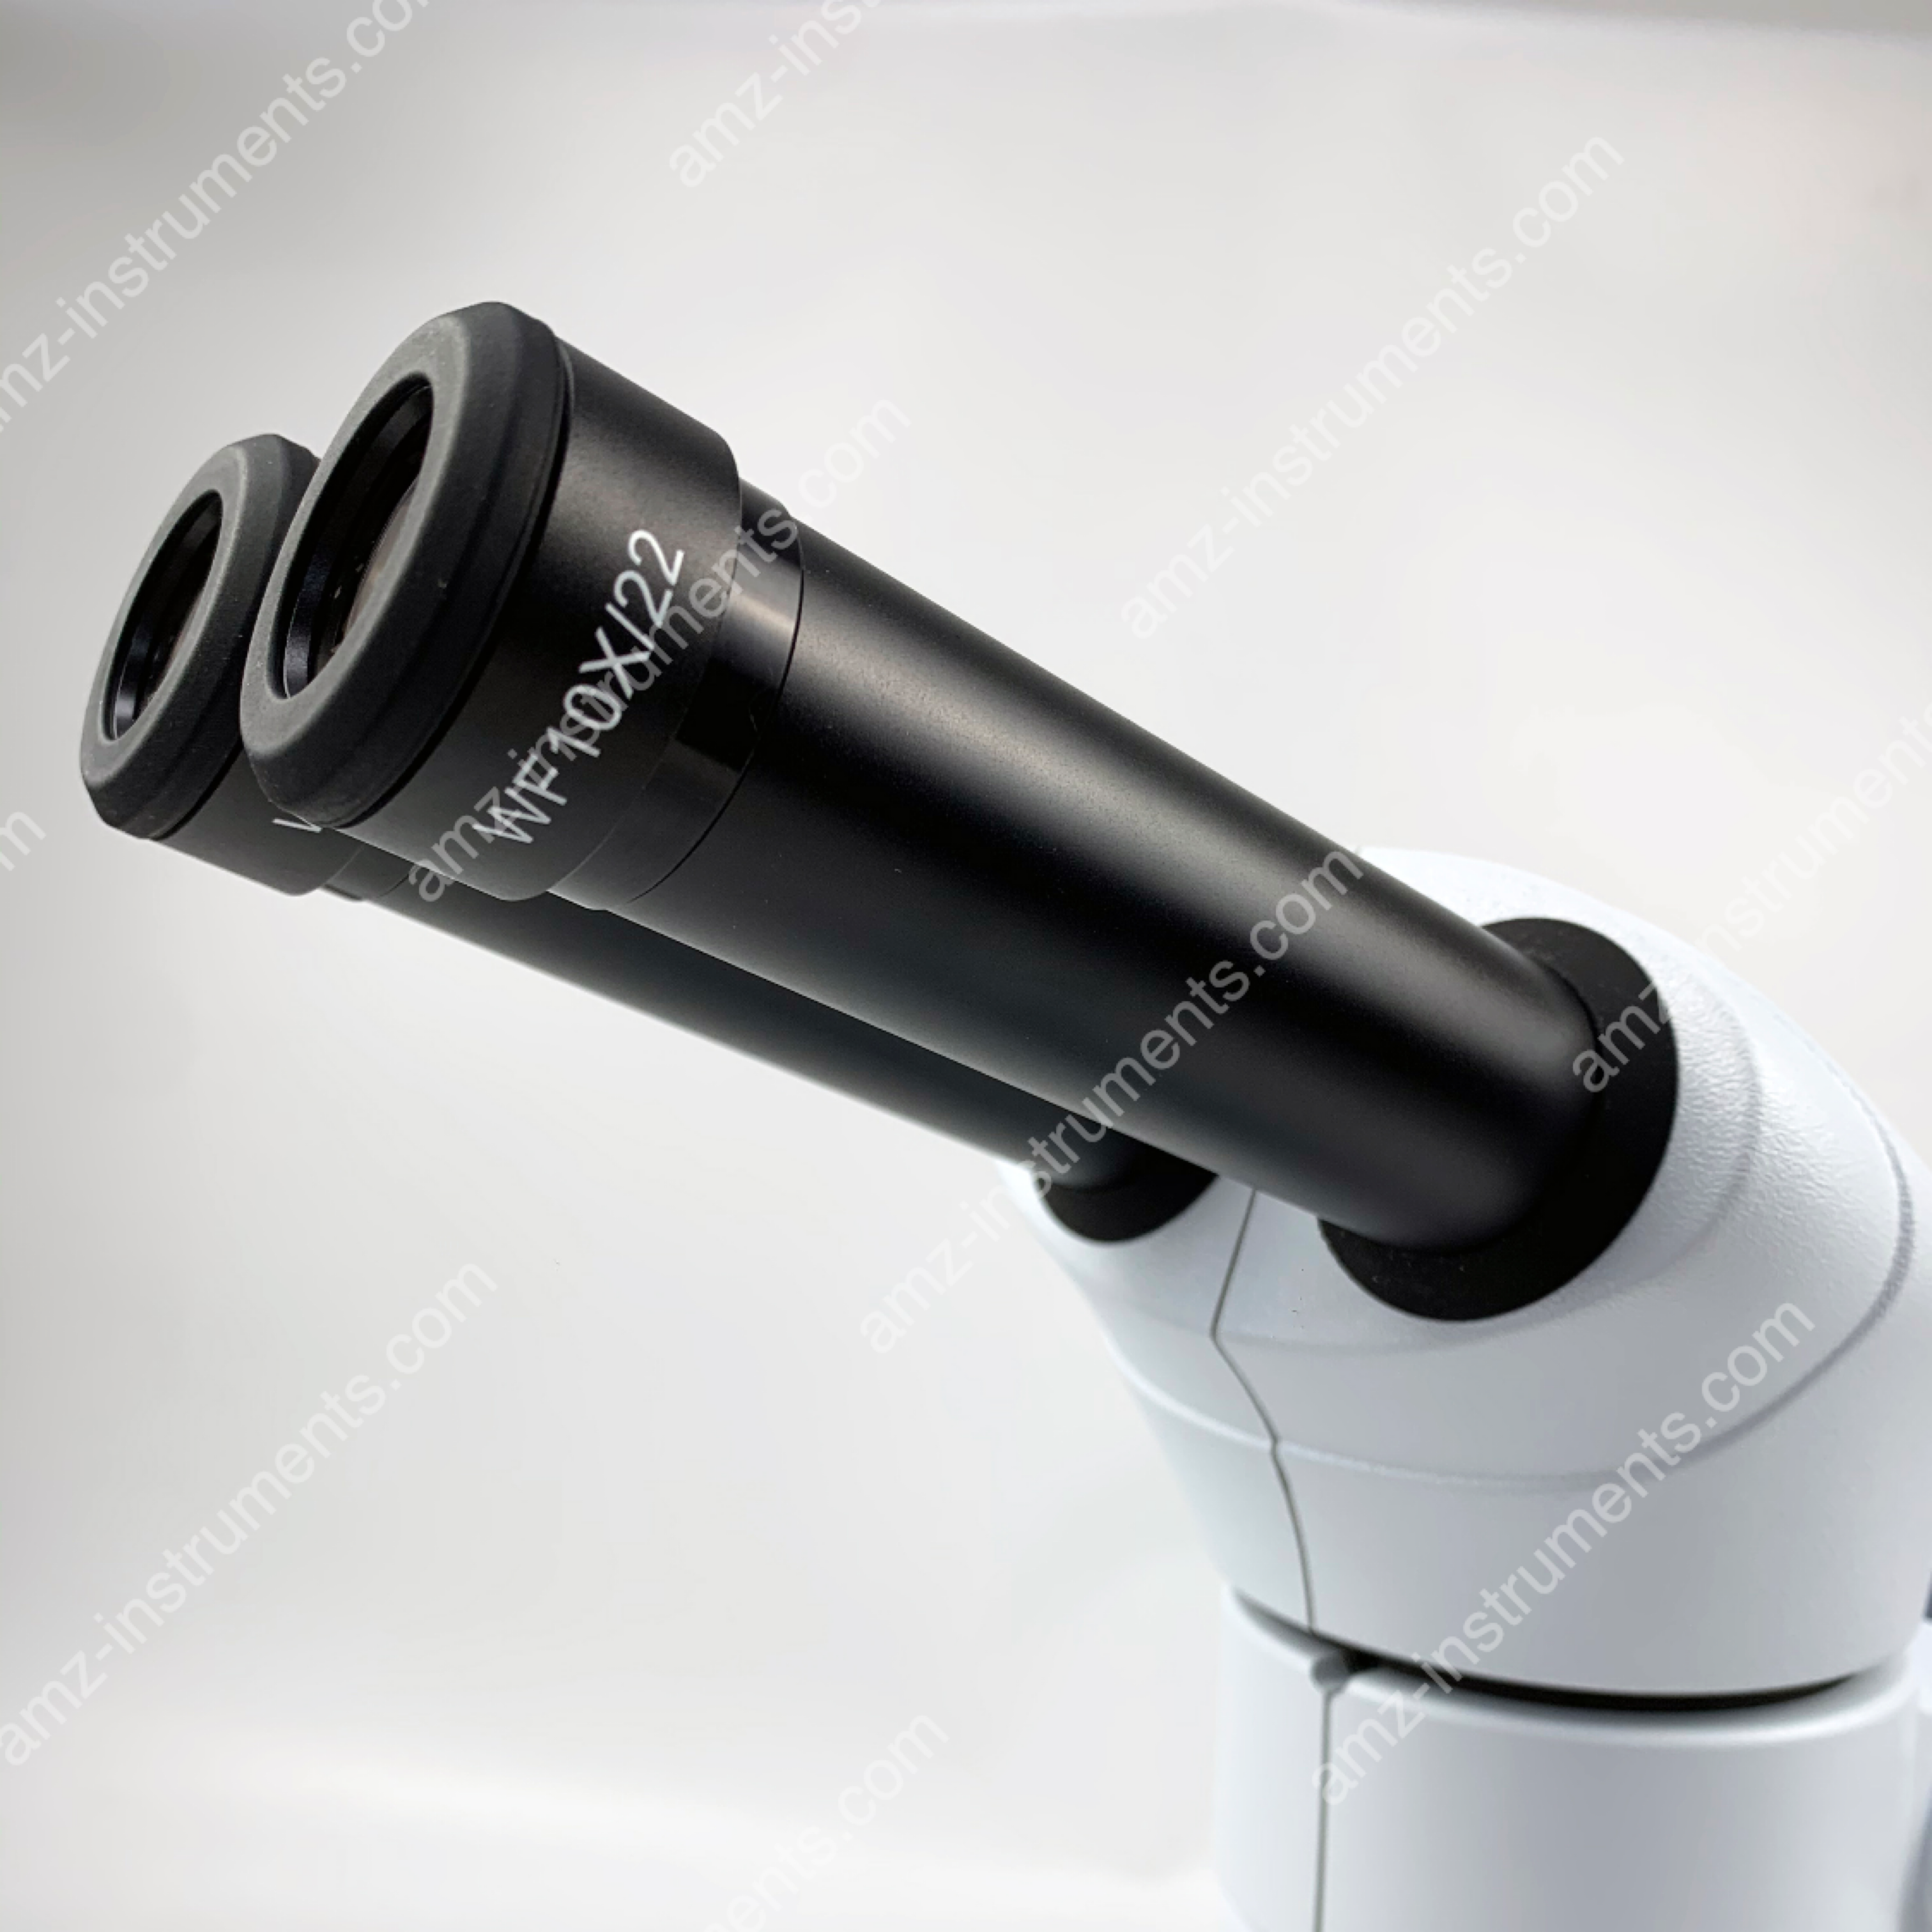 ZM-80 Binocular Zoom Stereo Microscope With Galilean Infinity Parallel Light Path